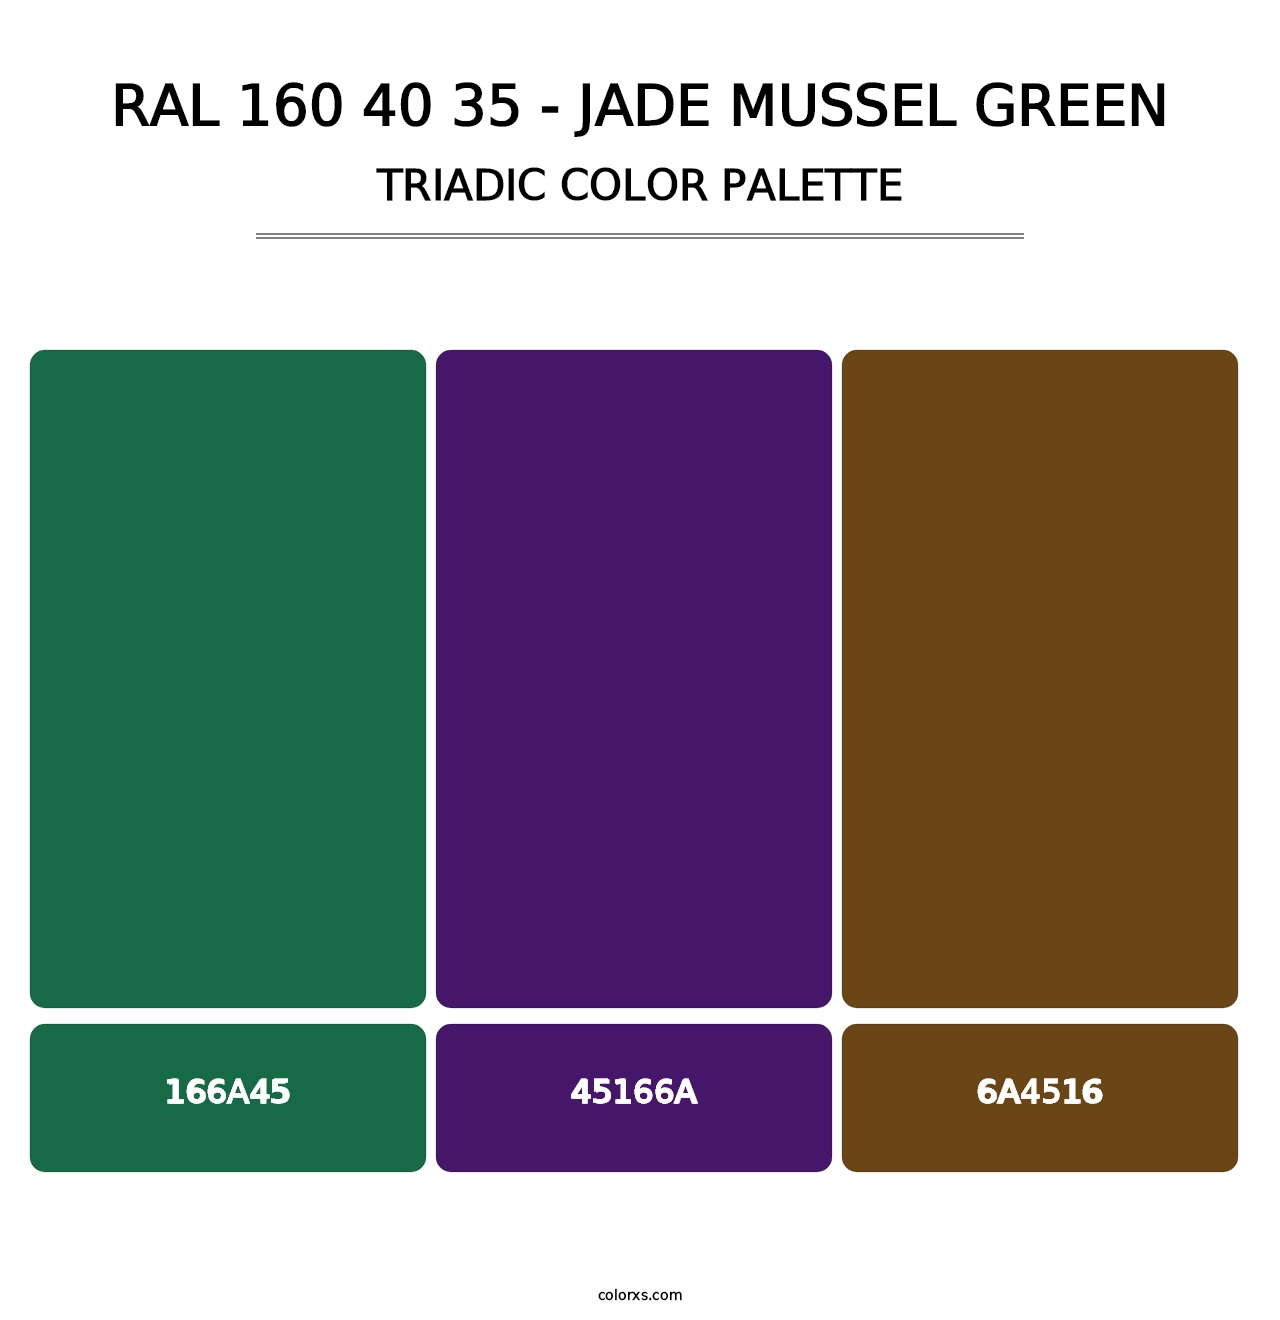 RAL 160 40 35 - Jade Mussel Green - Triadic Color Palette